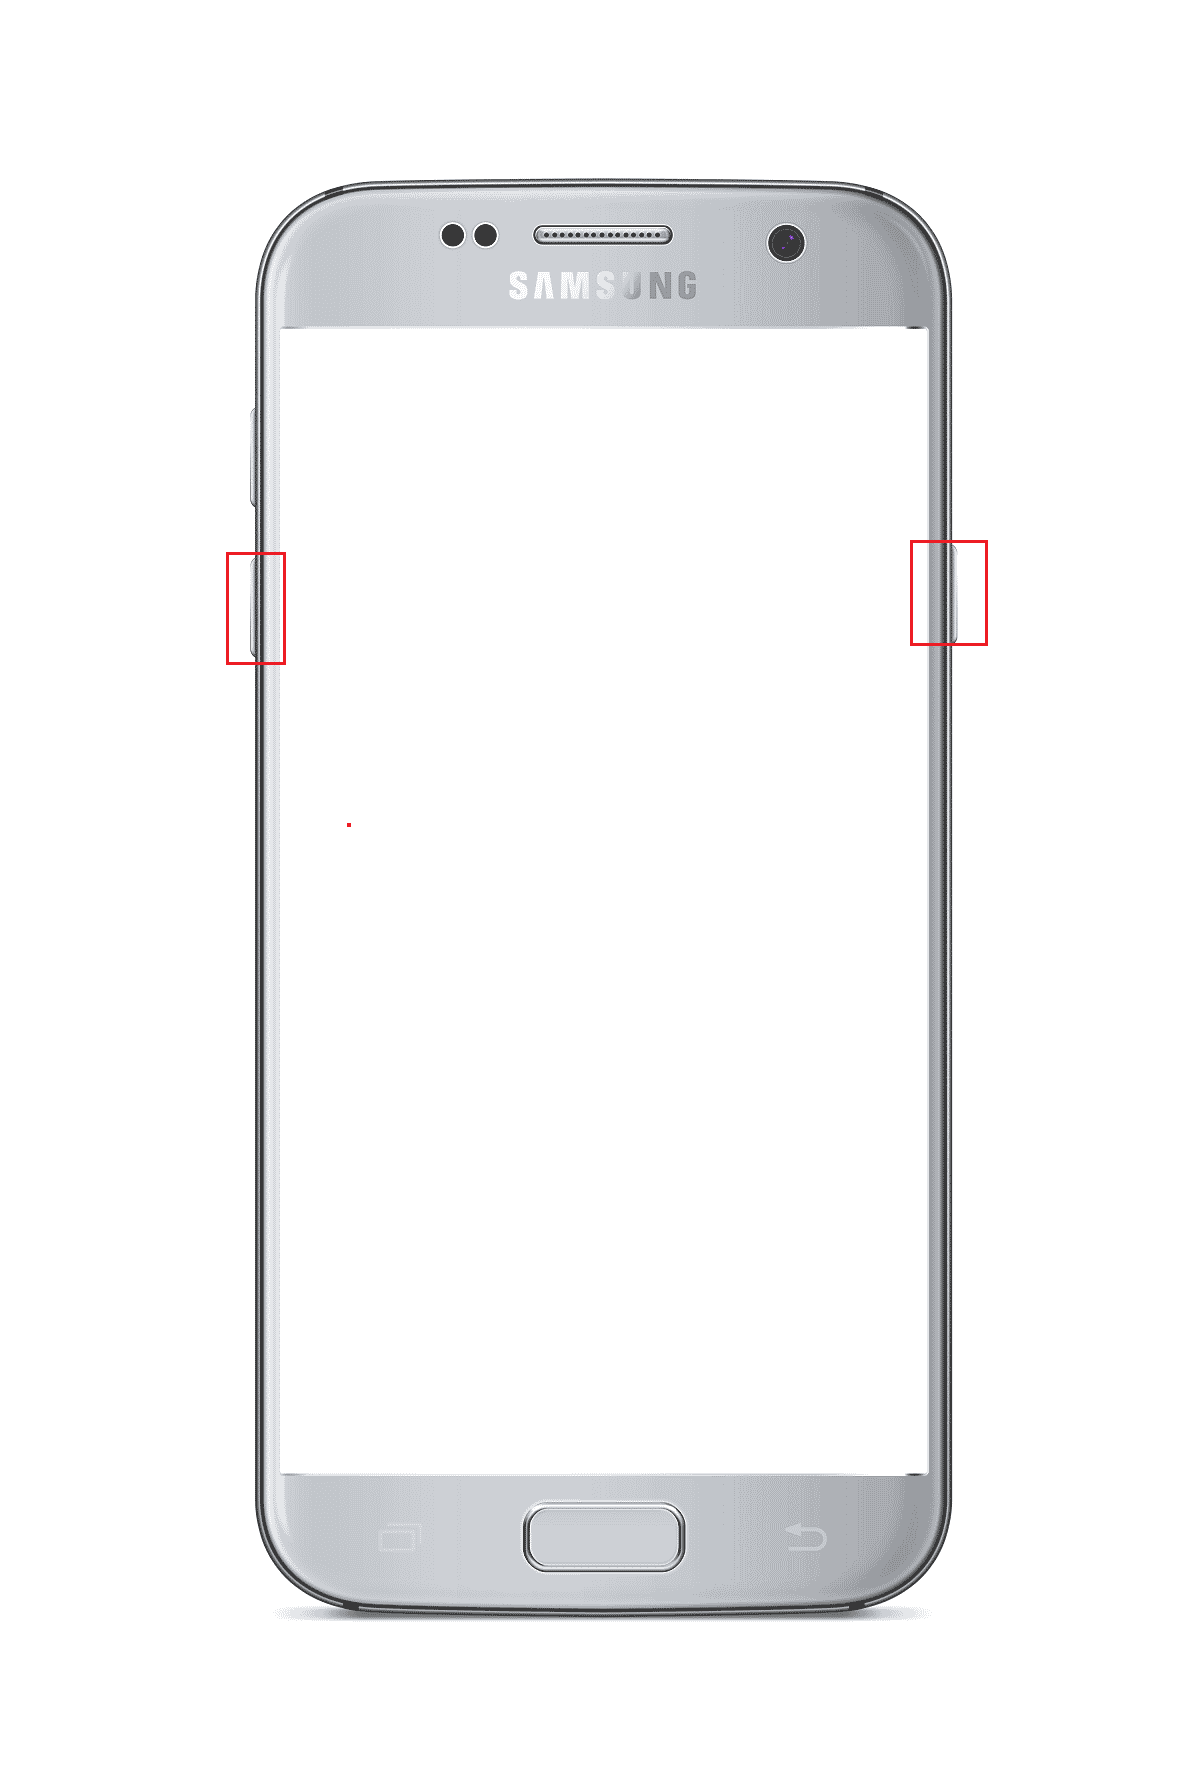 press volume down and power button. Fix Galaxy Note 5 SIM Card Error